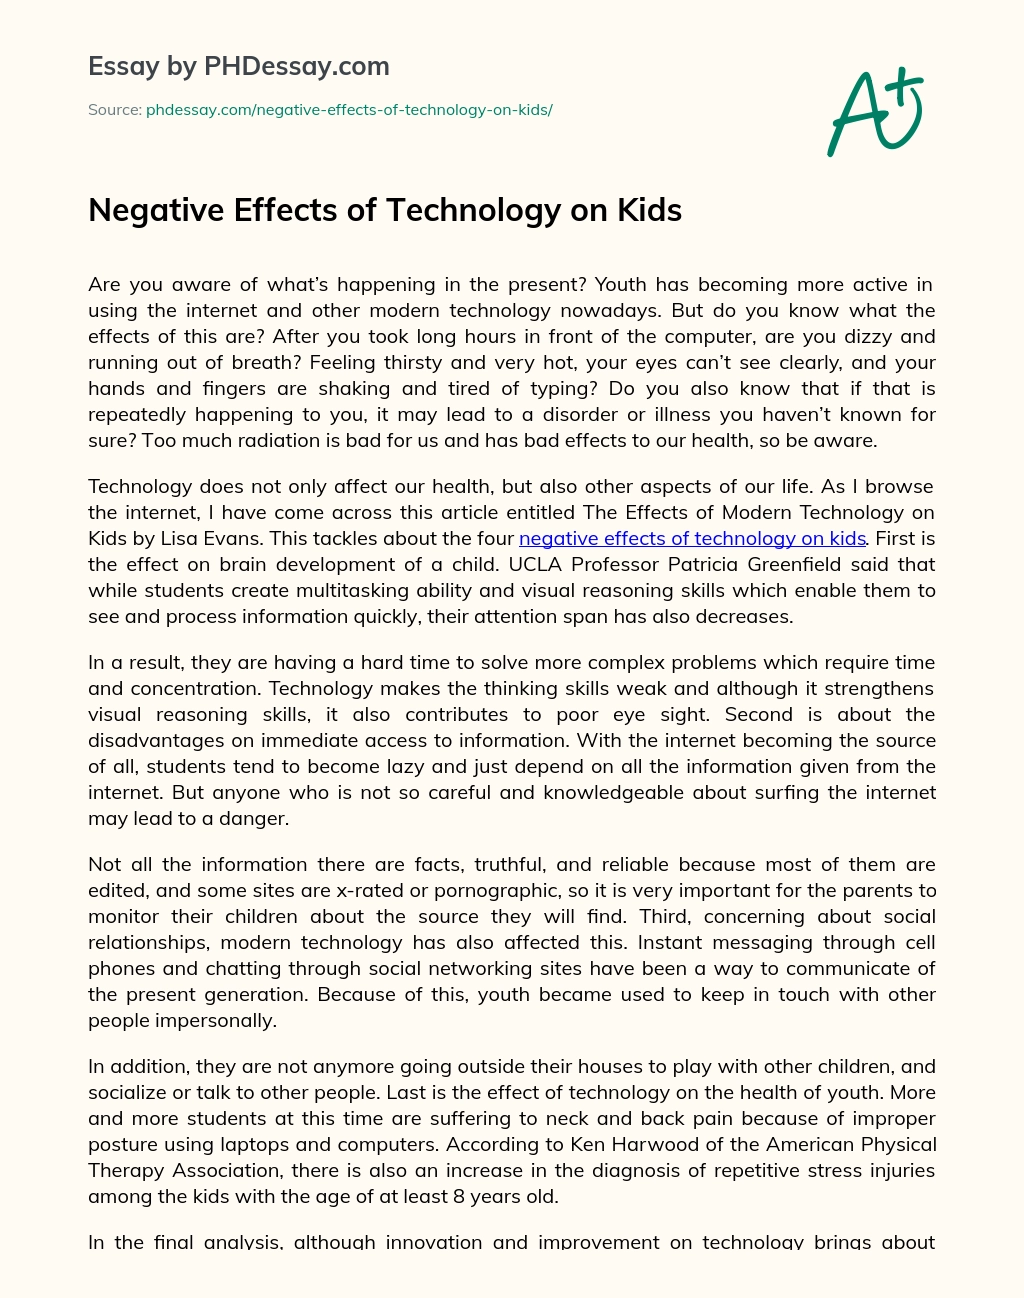 Negative Effects of Technology on Kids essay